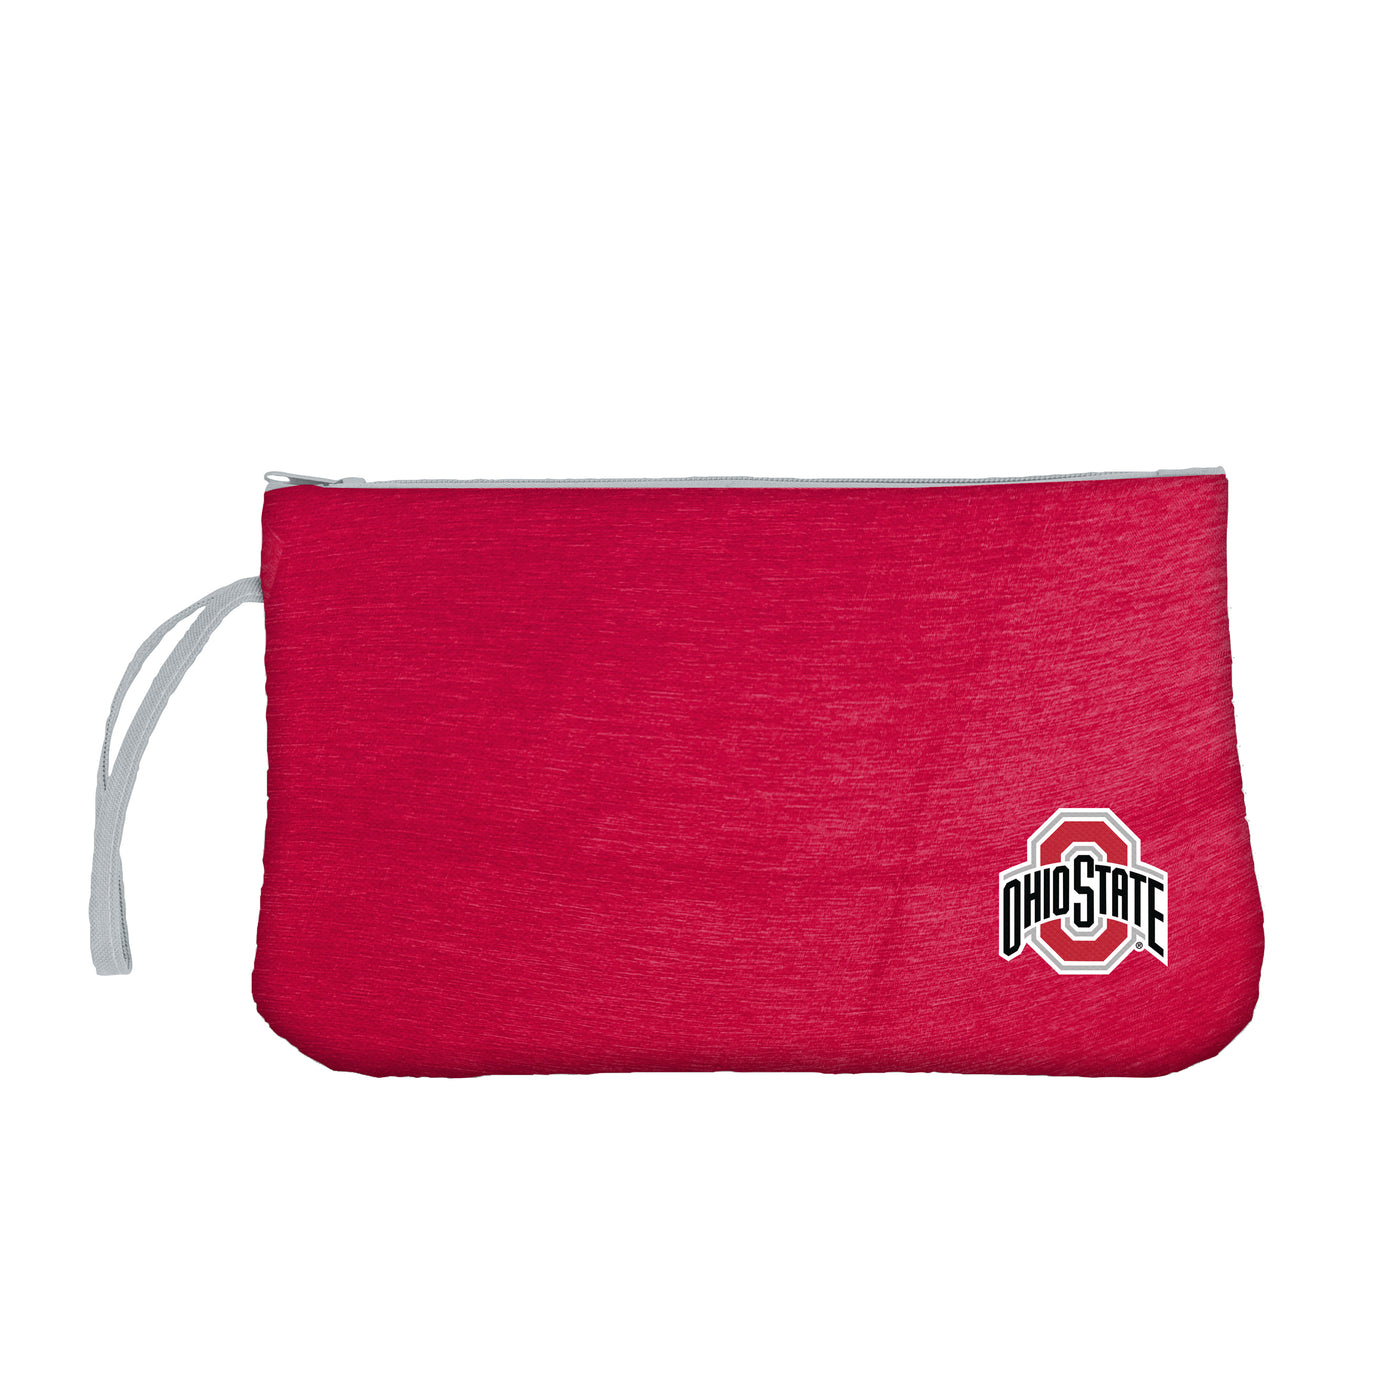 The Ohio State University Red Wristlet